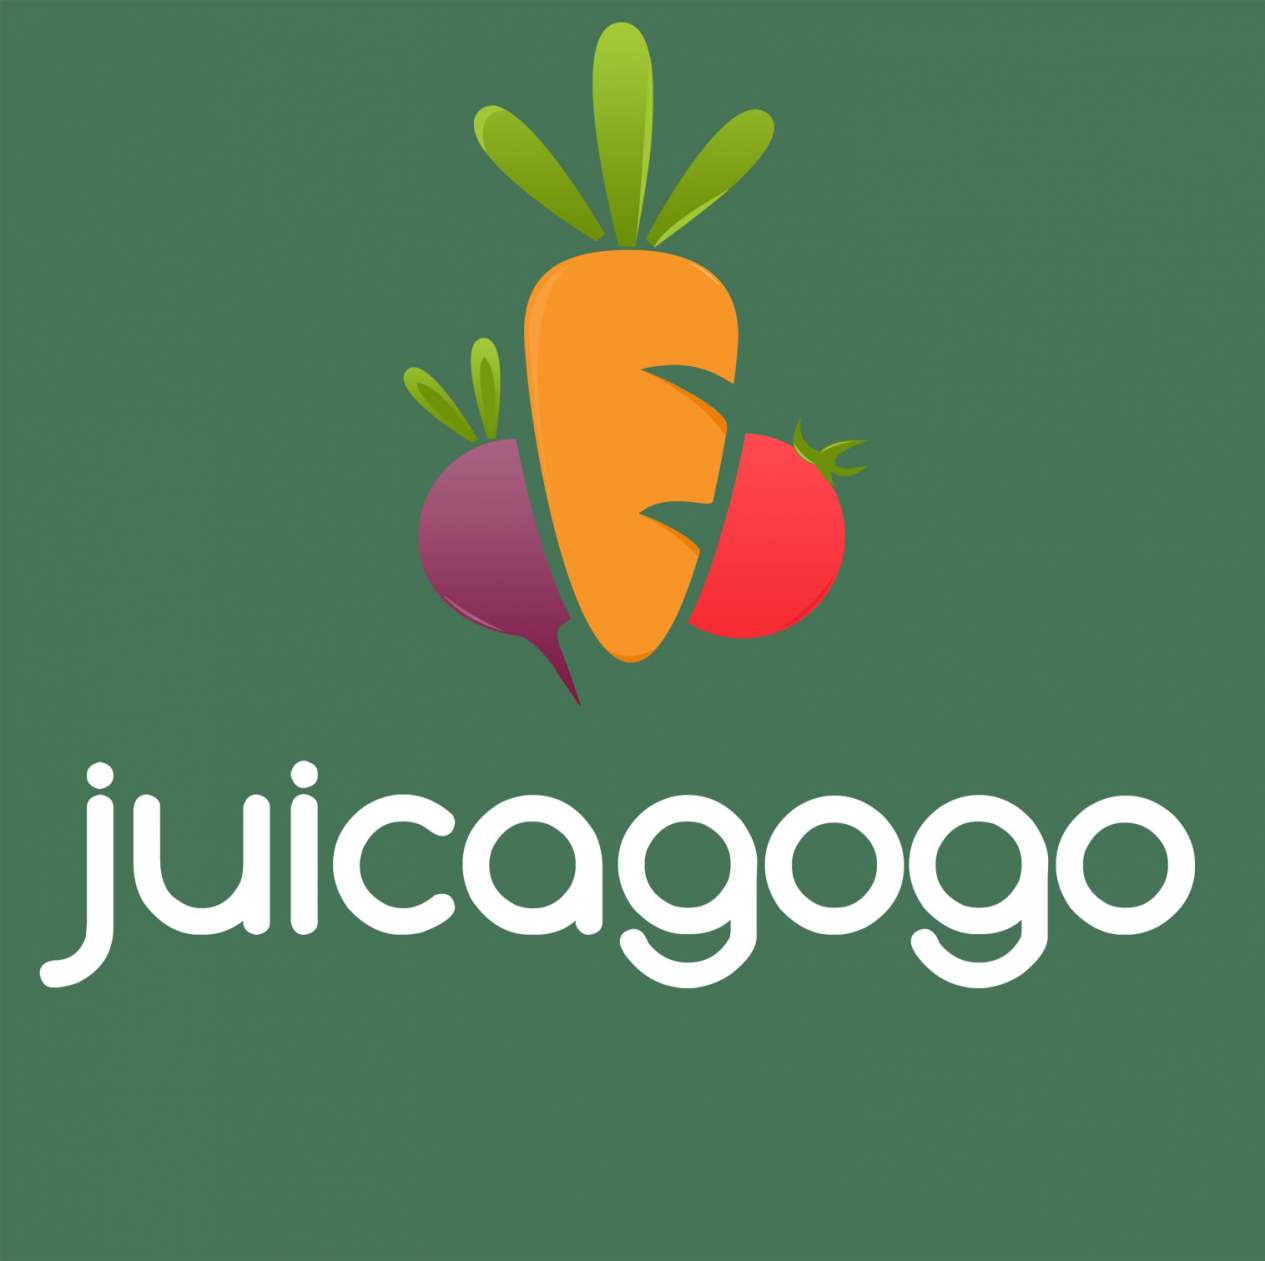 Juicagogo Logo